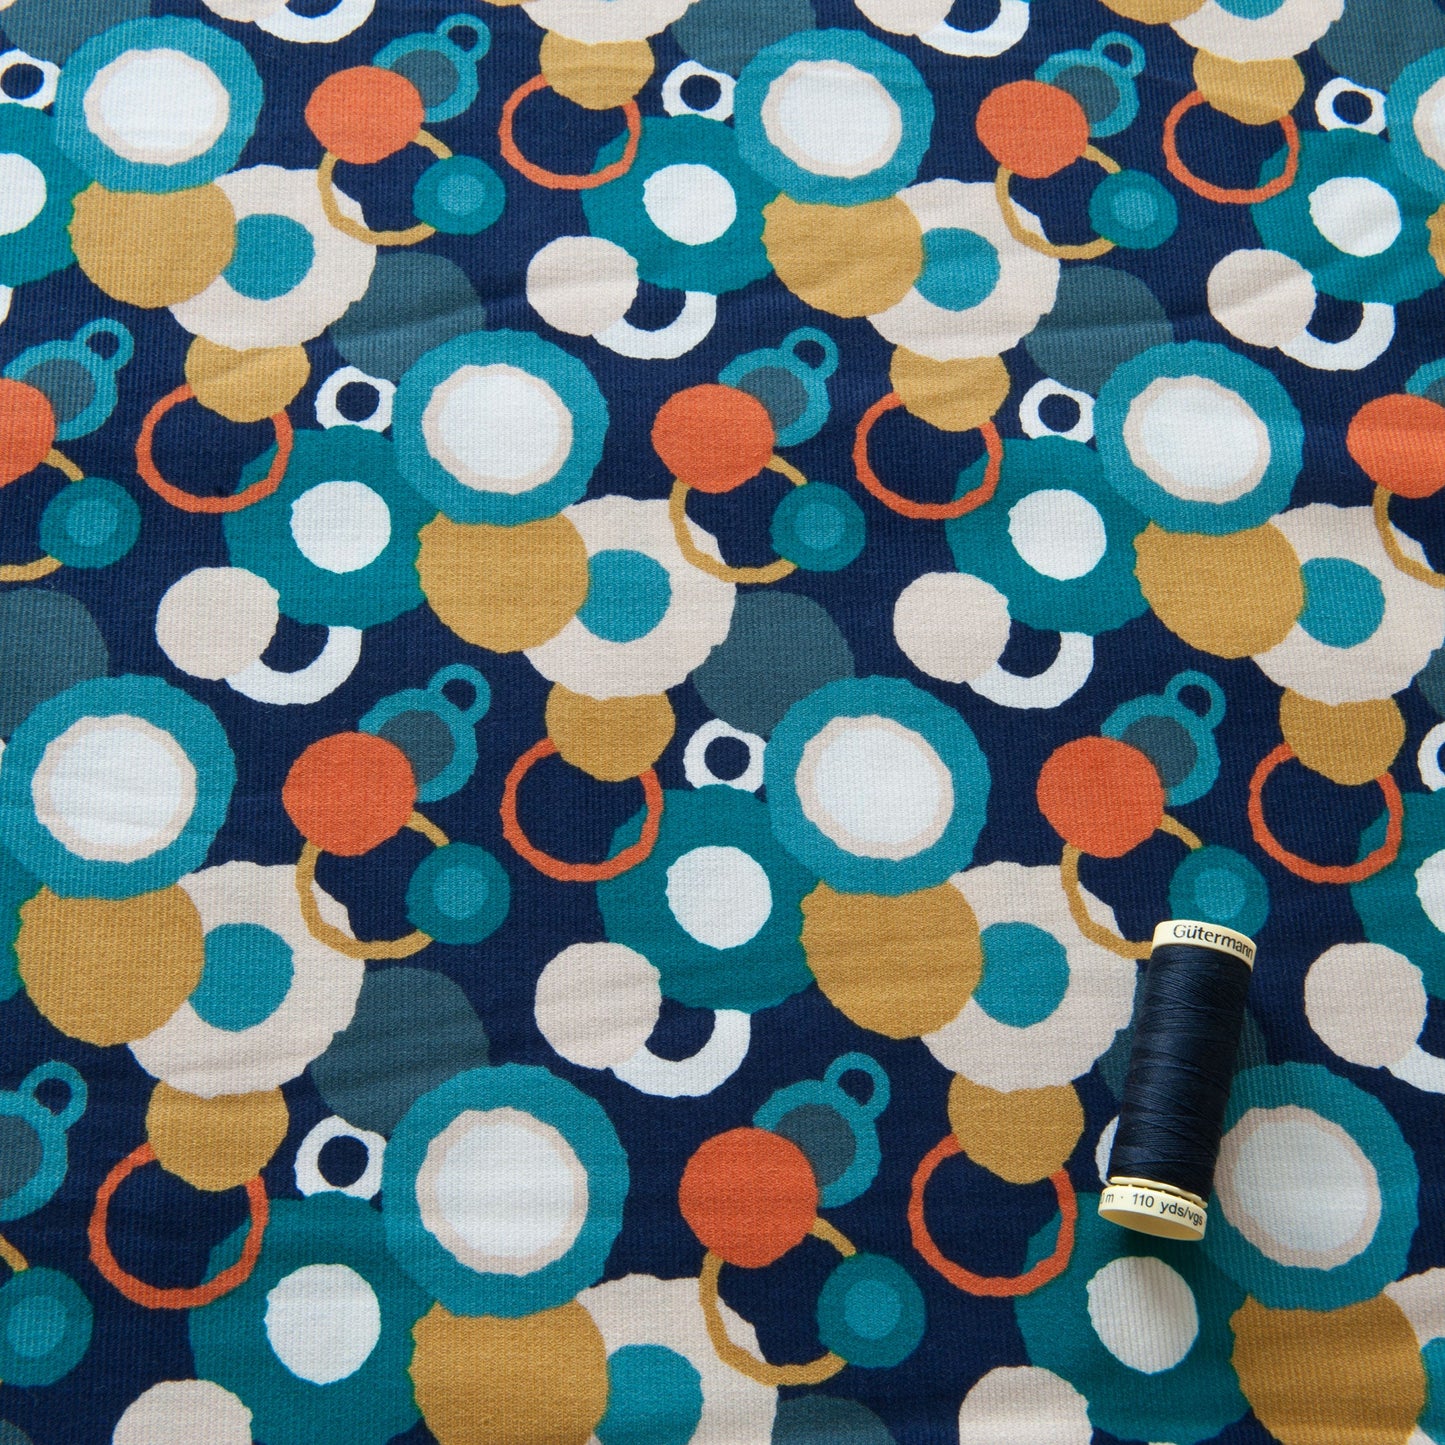 Circles Needlecord Fabric in Teal - Dashwood Studio / Sholto Drumlanrig - 2.15m Piece